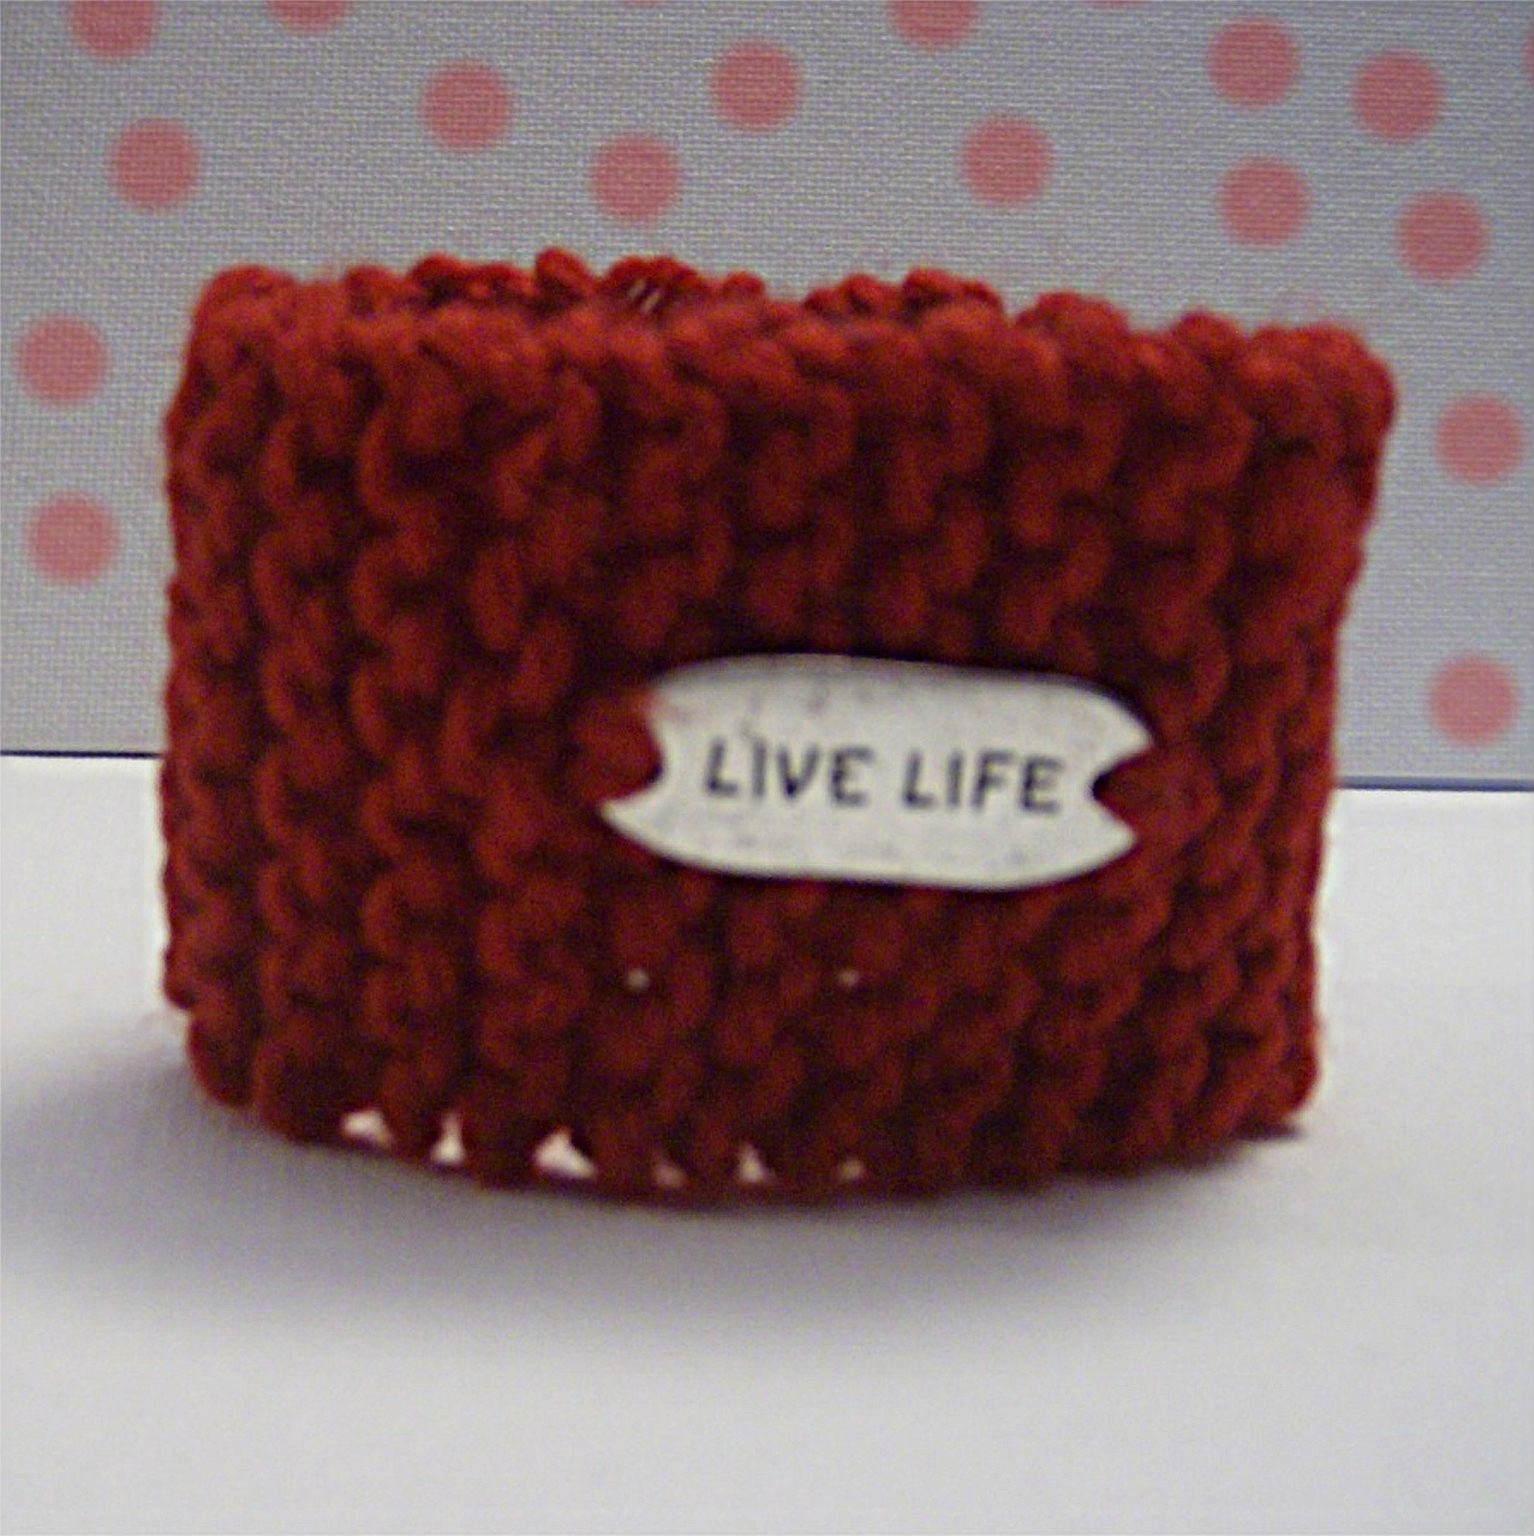 [Live+Life+cuff.jpg]